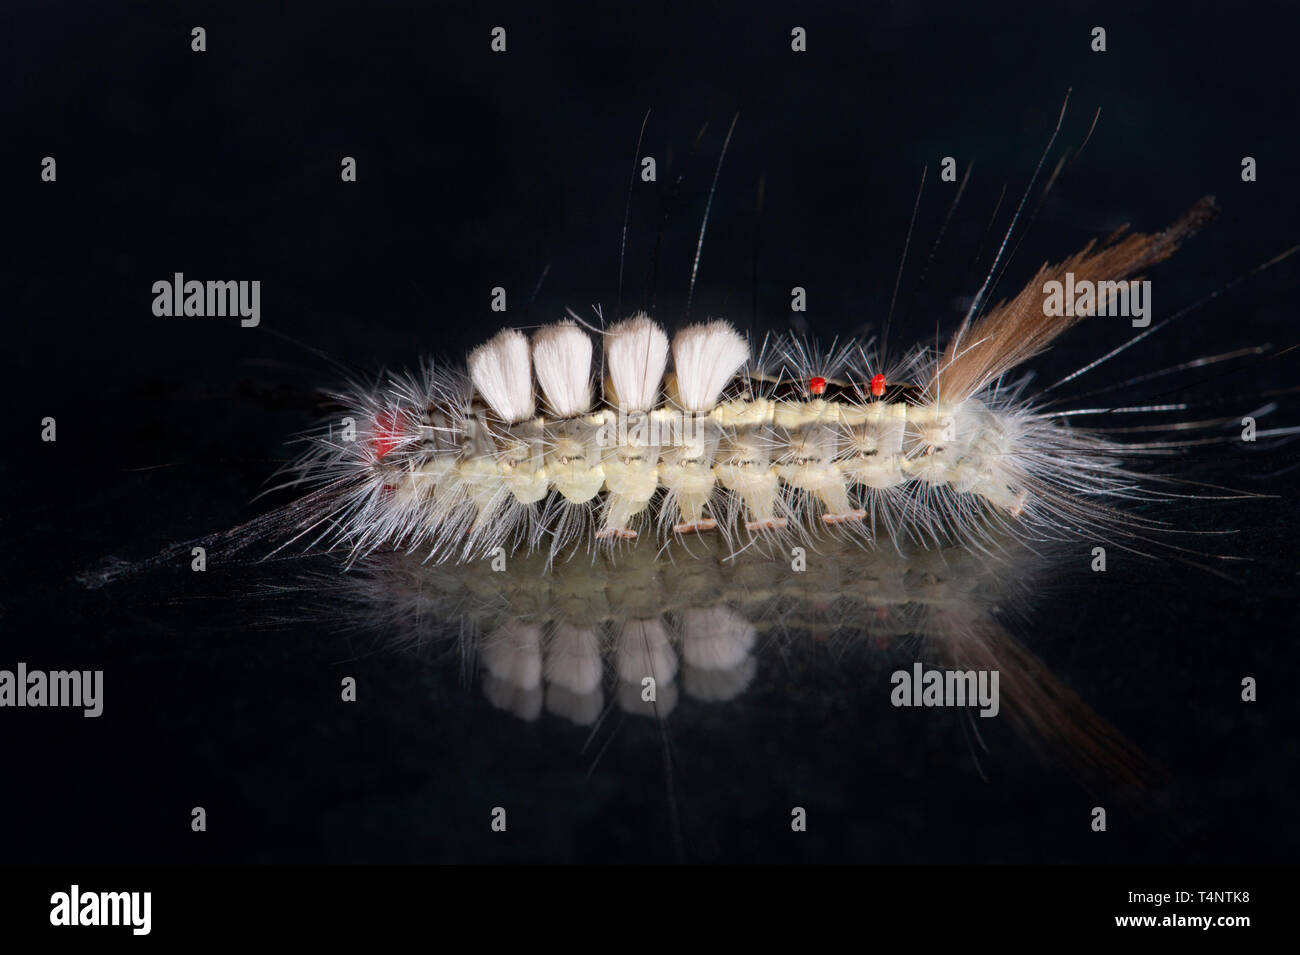 Detailed studio photograph of White-marked Tussock Moth caterpillar Stock Photo